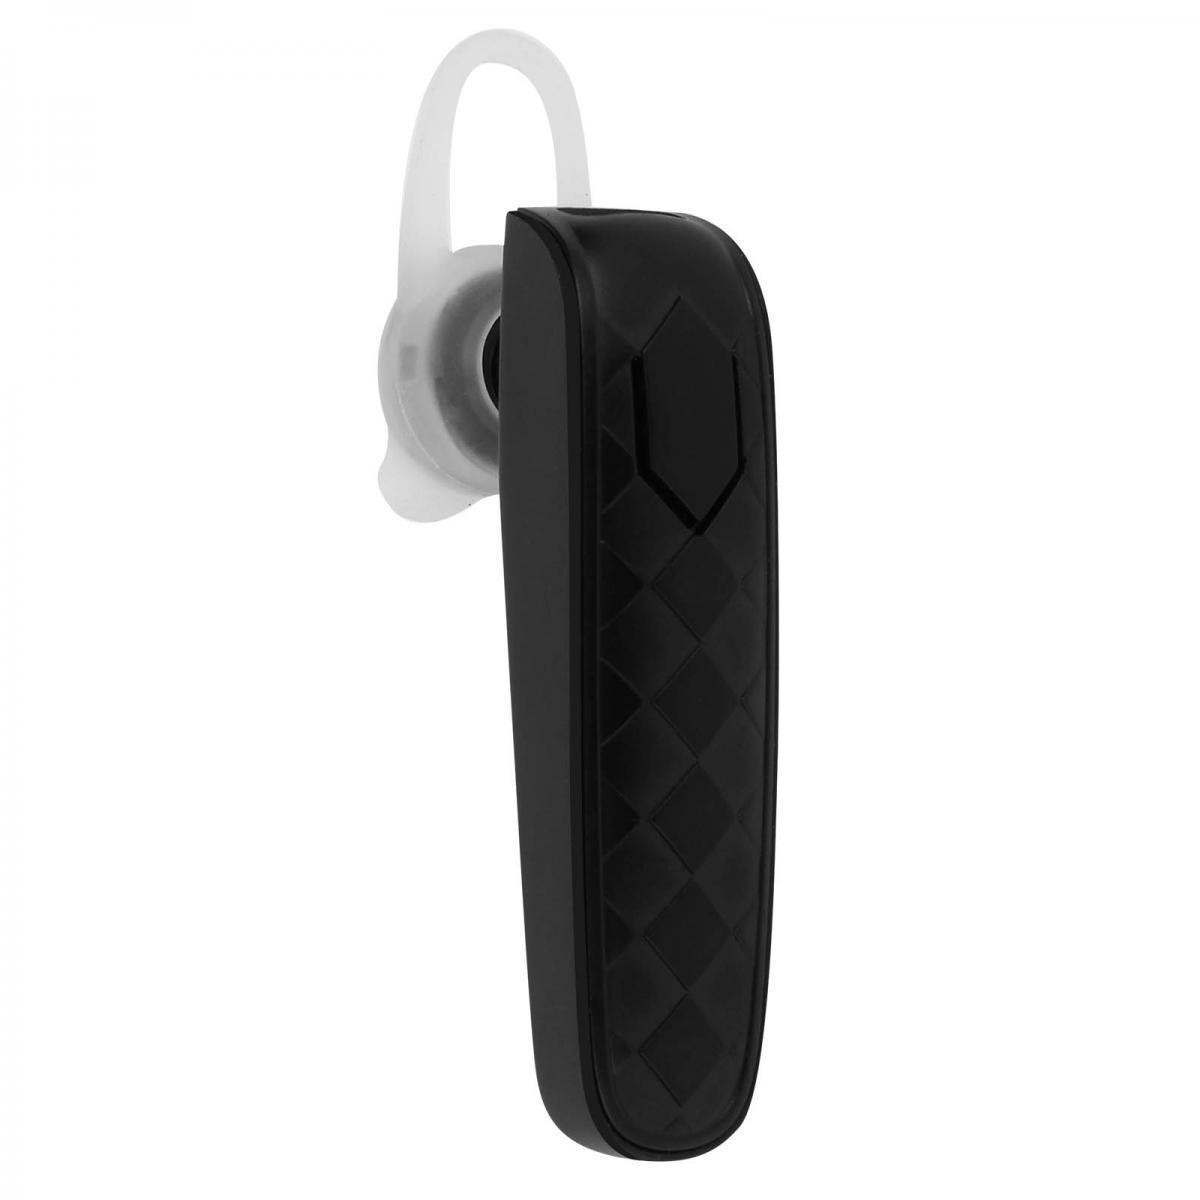 Inkax - Oreillette Sans fil Bluetooth Splendore BL-03 Inkax Noir - Réduction de bruits - Oreillette bluetooth